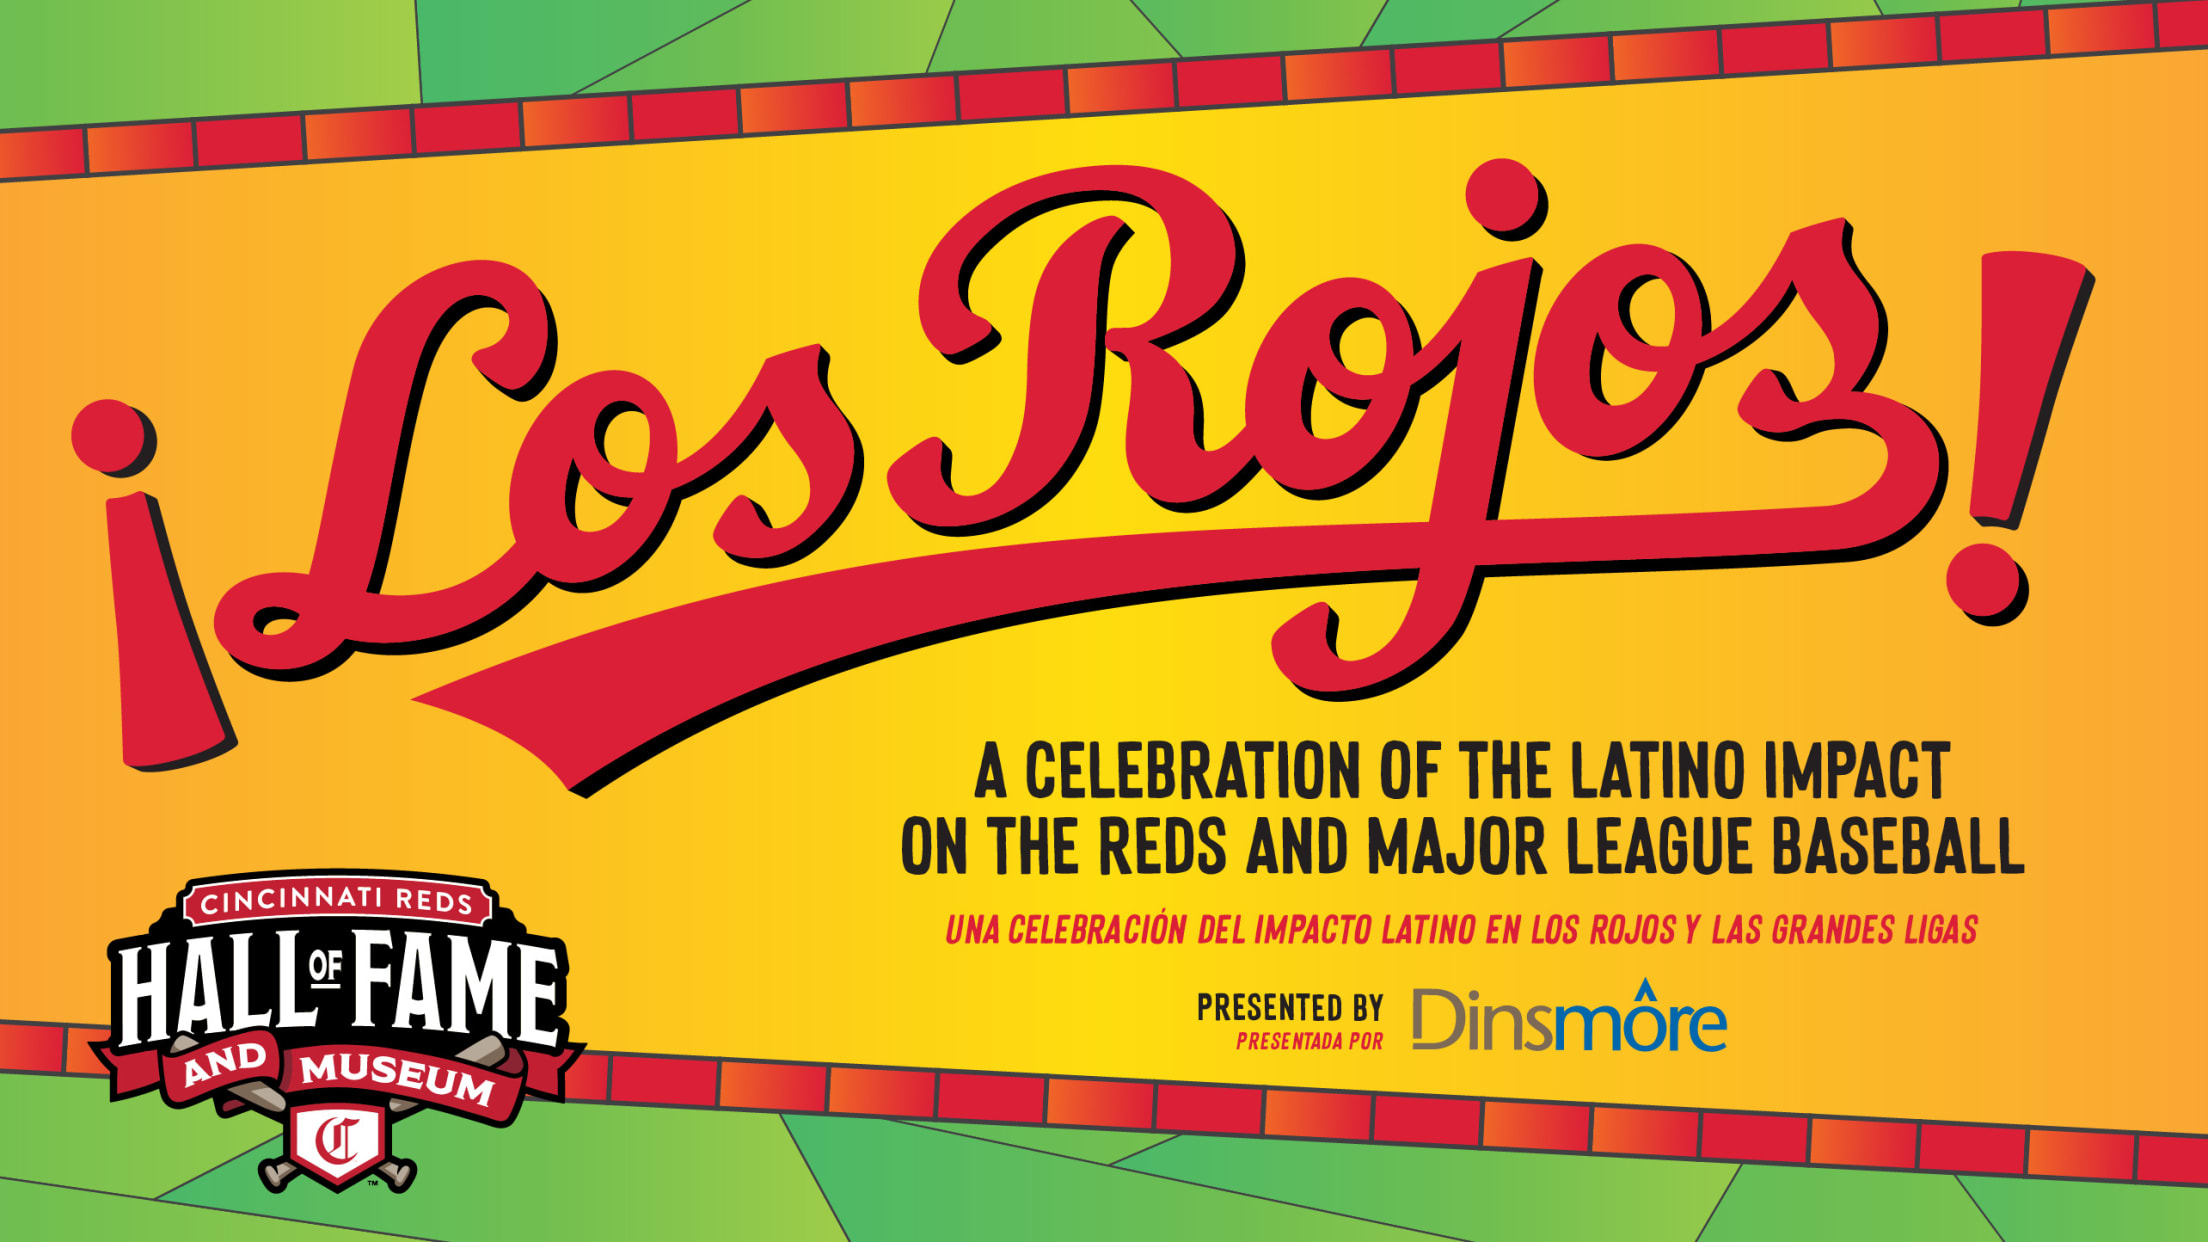 Los Rojos! New Reds Hall exhibit celebrates Latino impact on